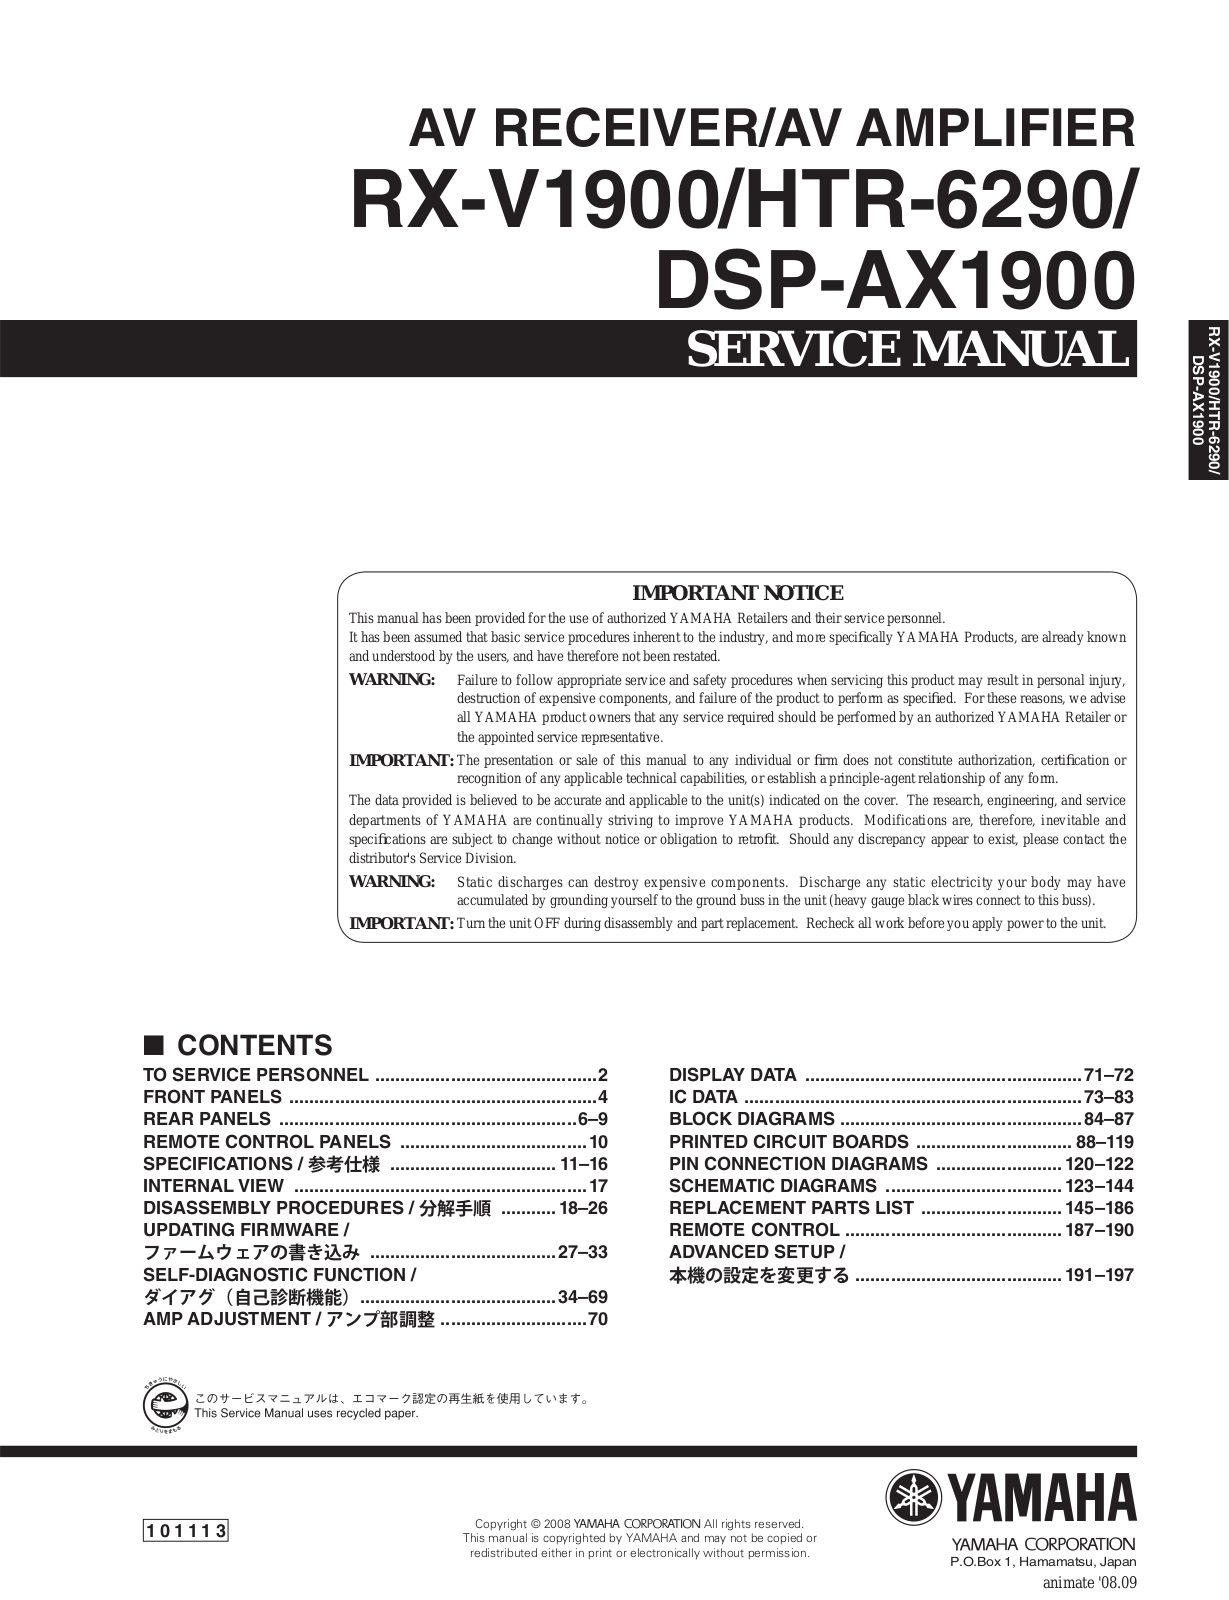 Yamaha RXV-1900, DSPAX-1900, HTR-6290 Service manual